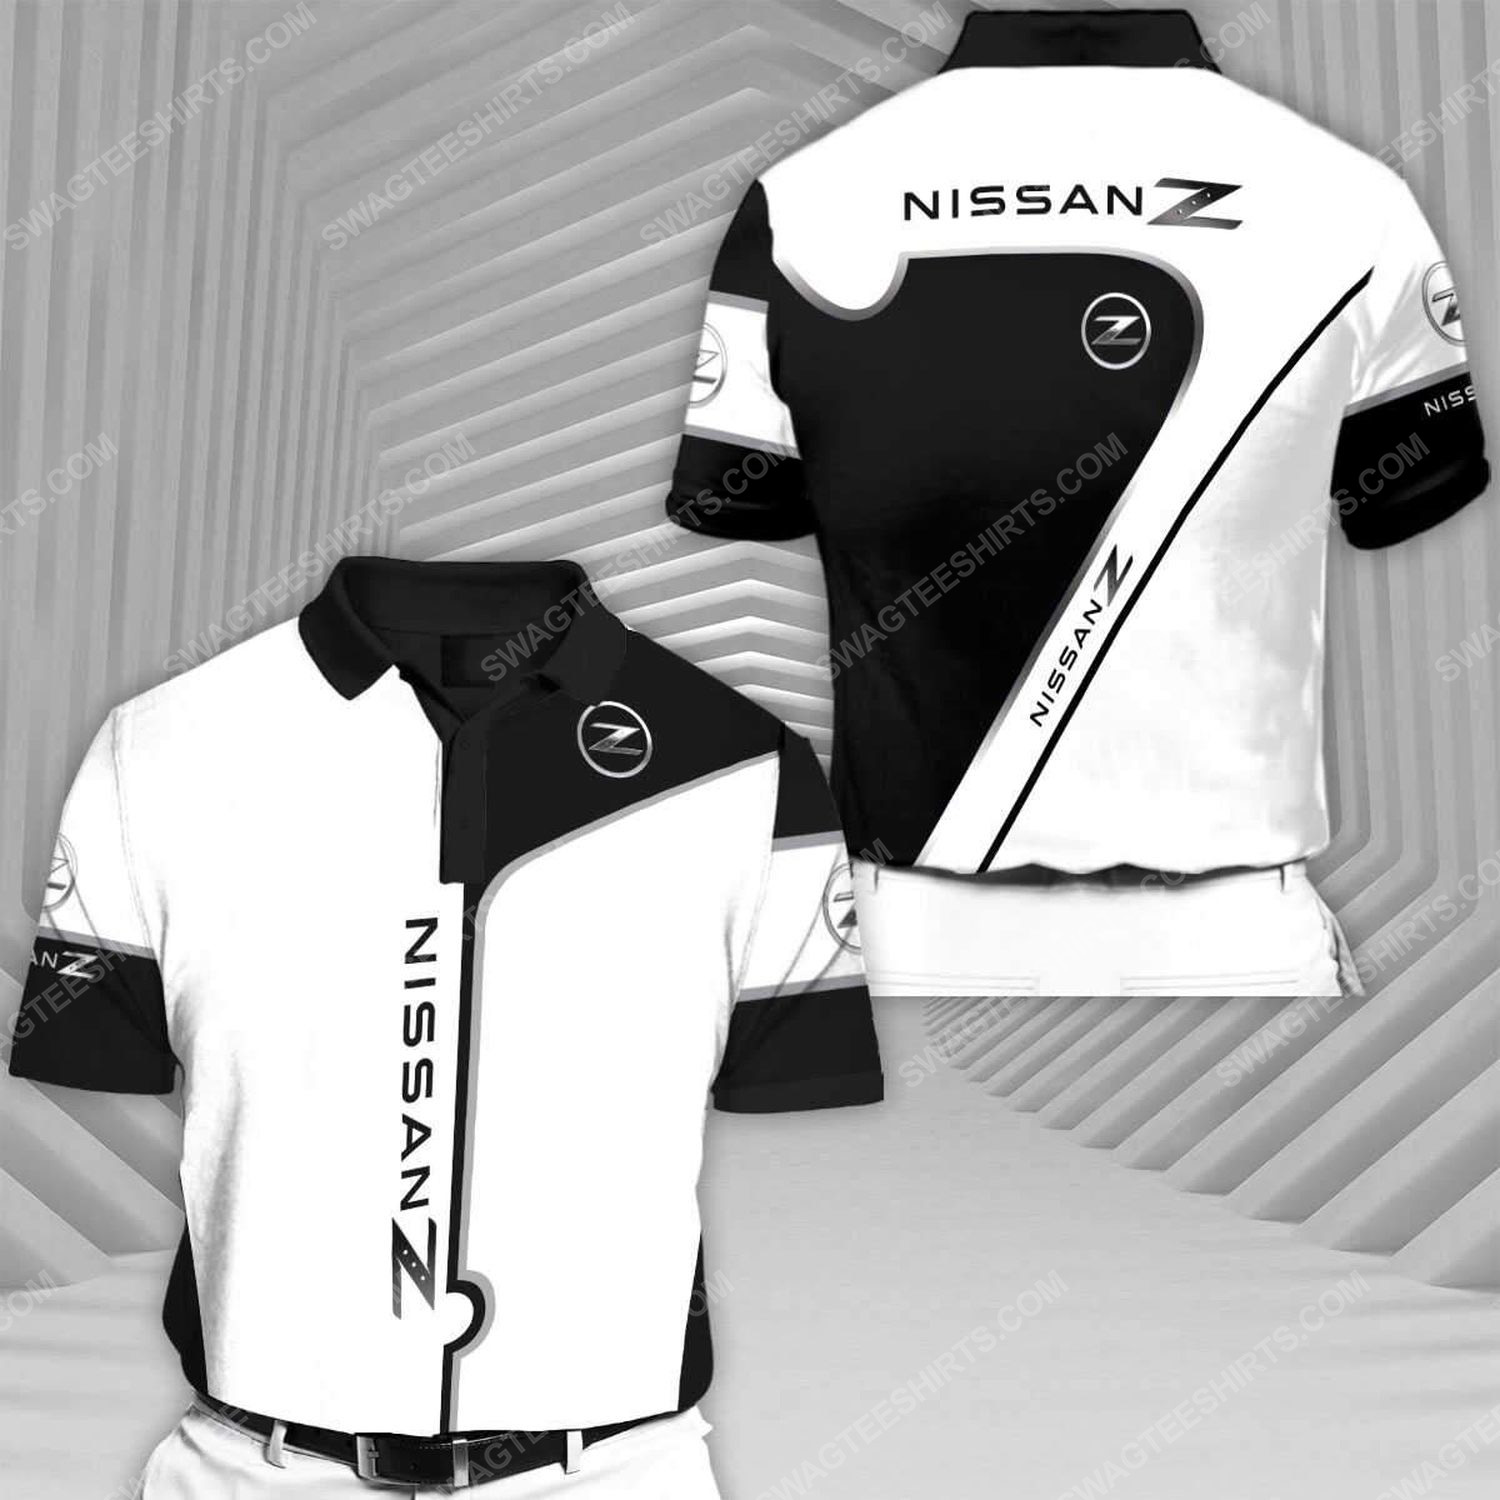 Nissan z cars racing all over print polo shirt 1 - Copy (2)